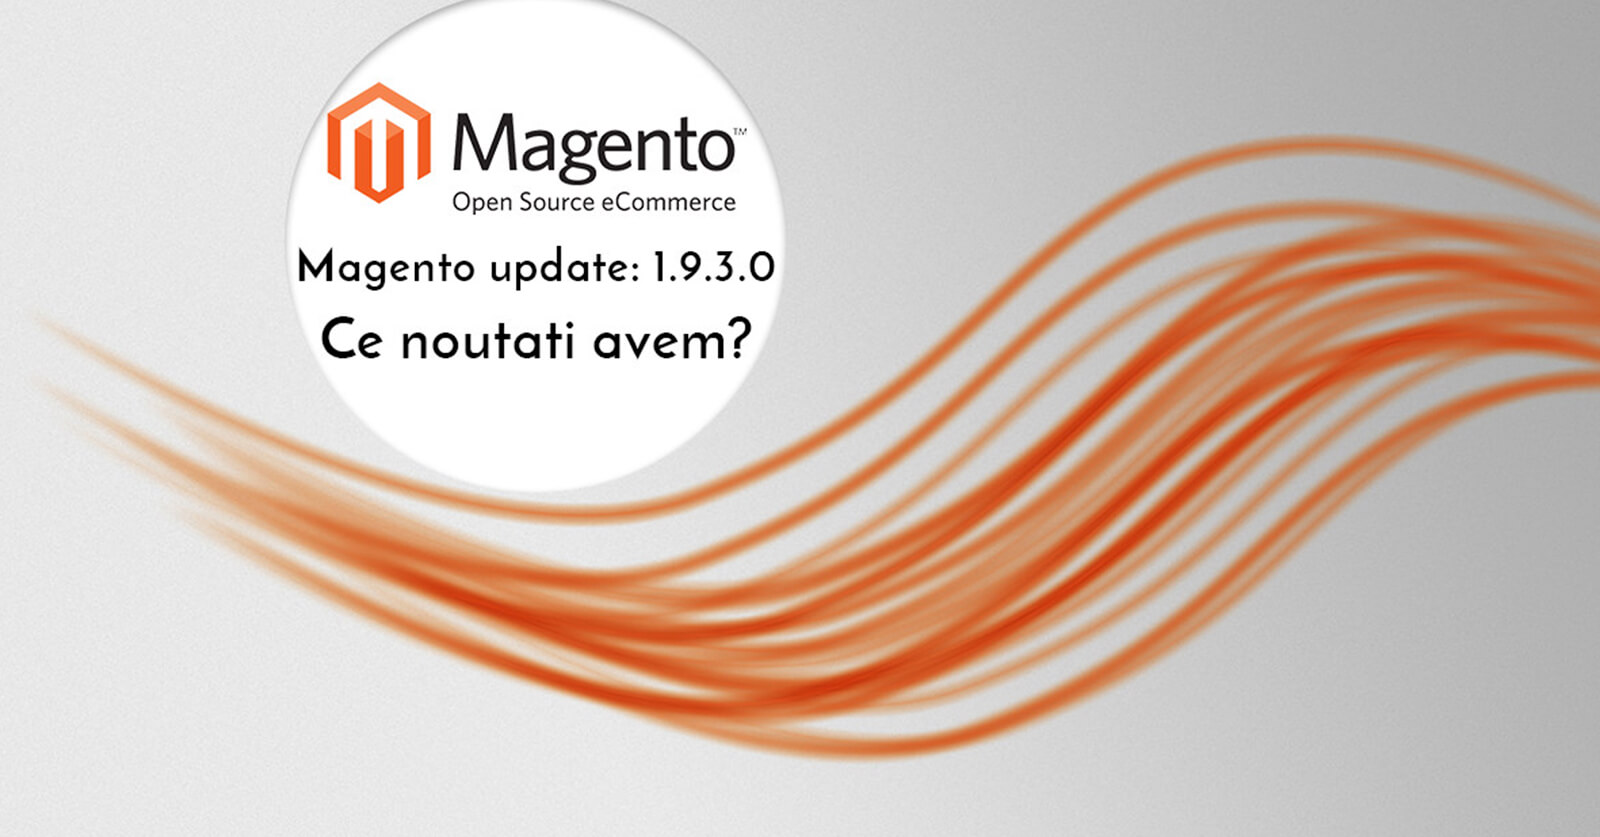 Magento CE update 1.9.3.0 – Ce noutati avem ?